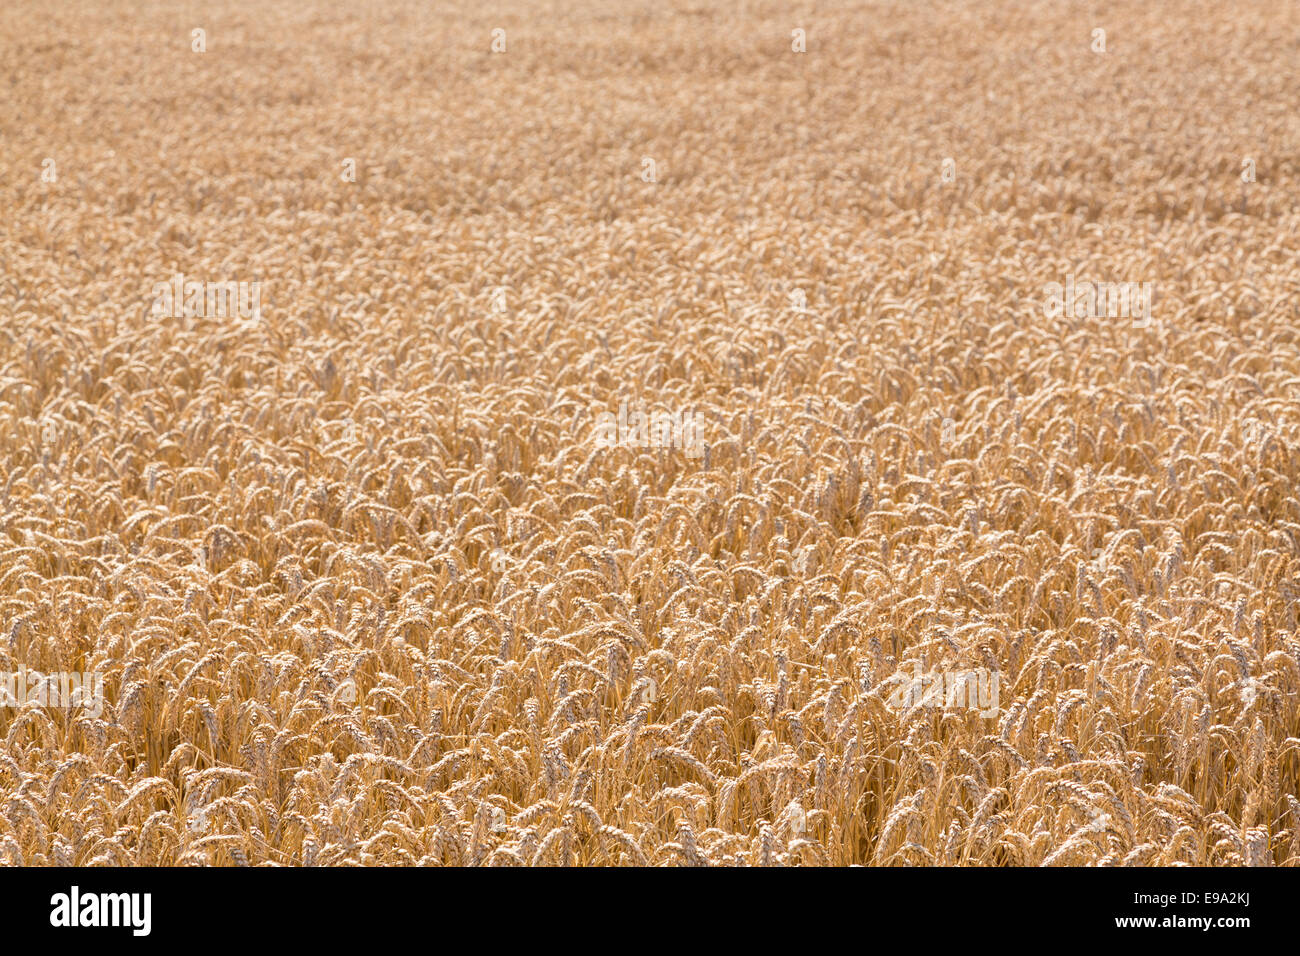 Ears of corn in fields of England Stock Photo